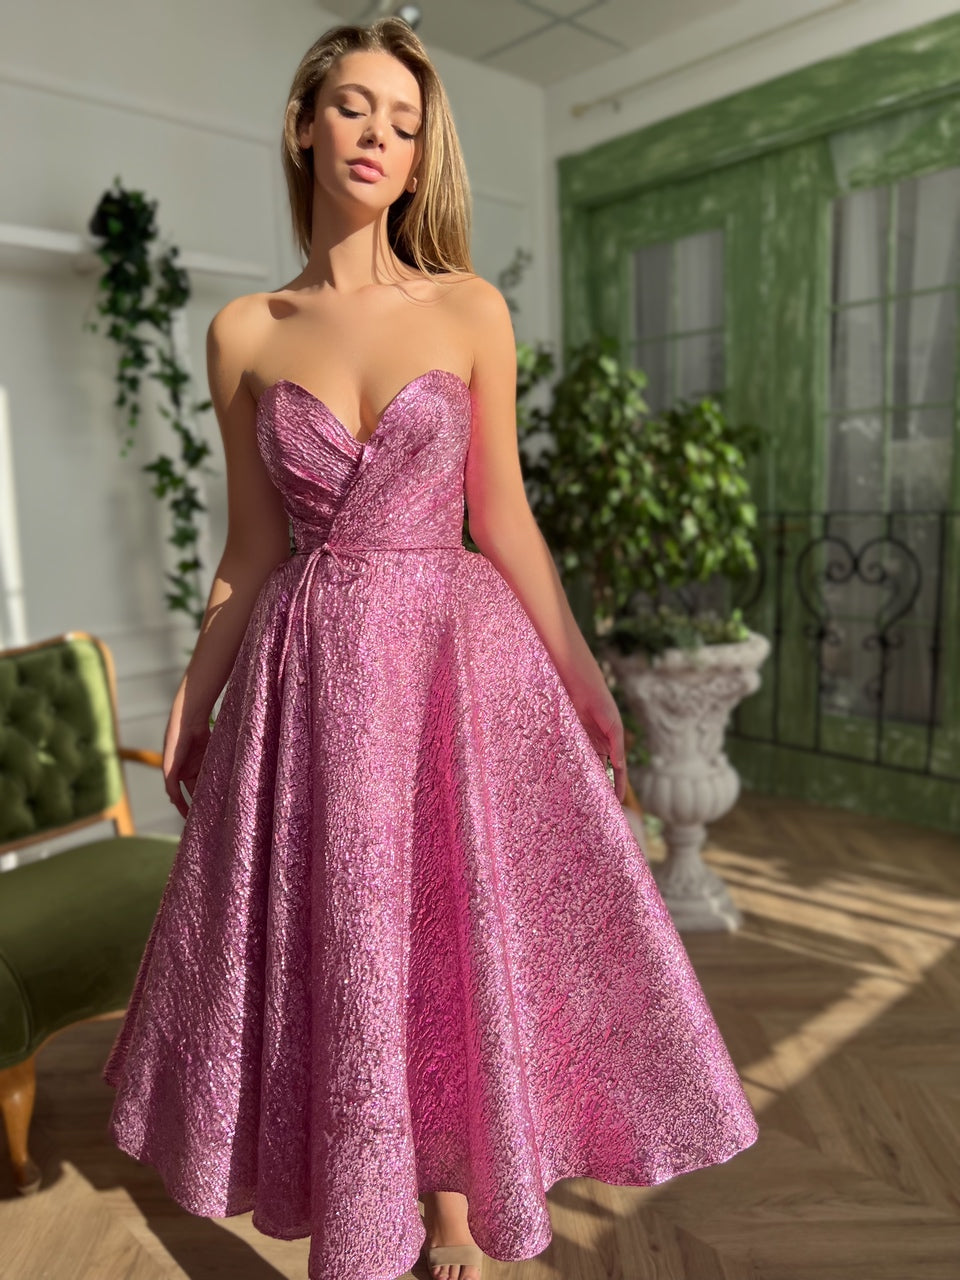 Pink mini dress with no sleeves and taffeta brocade fabric